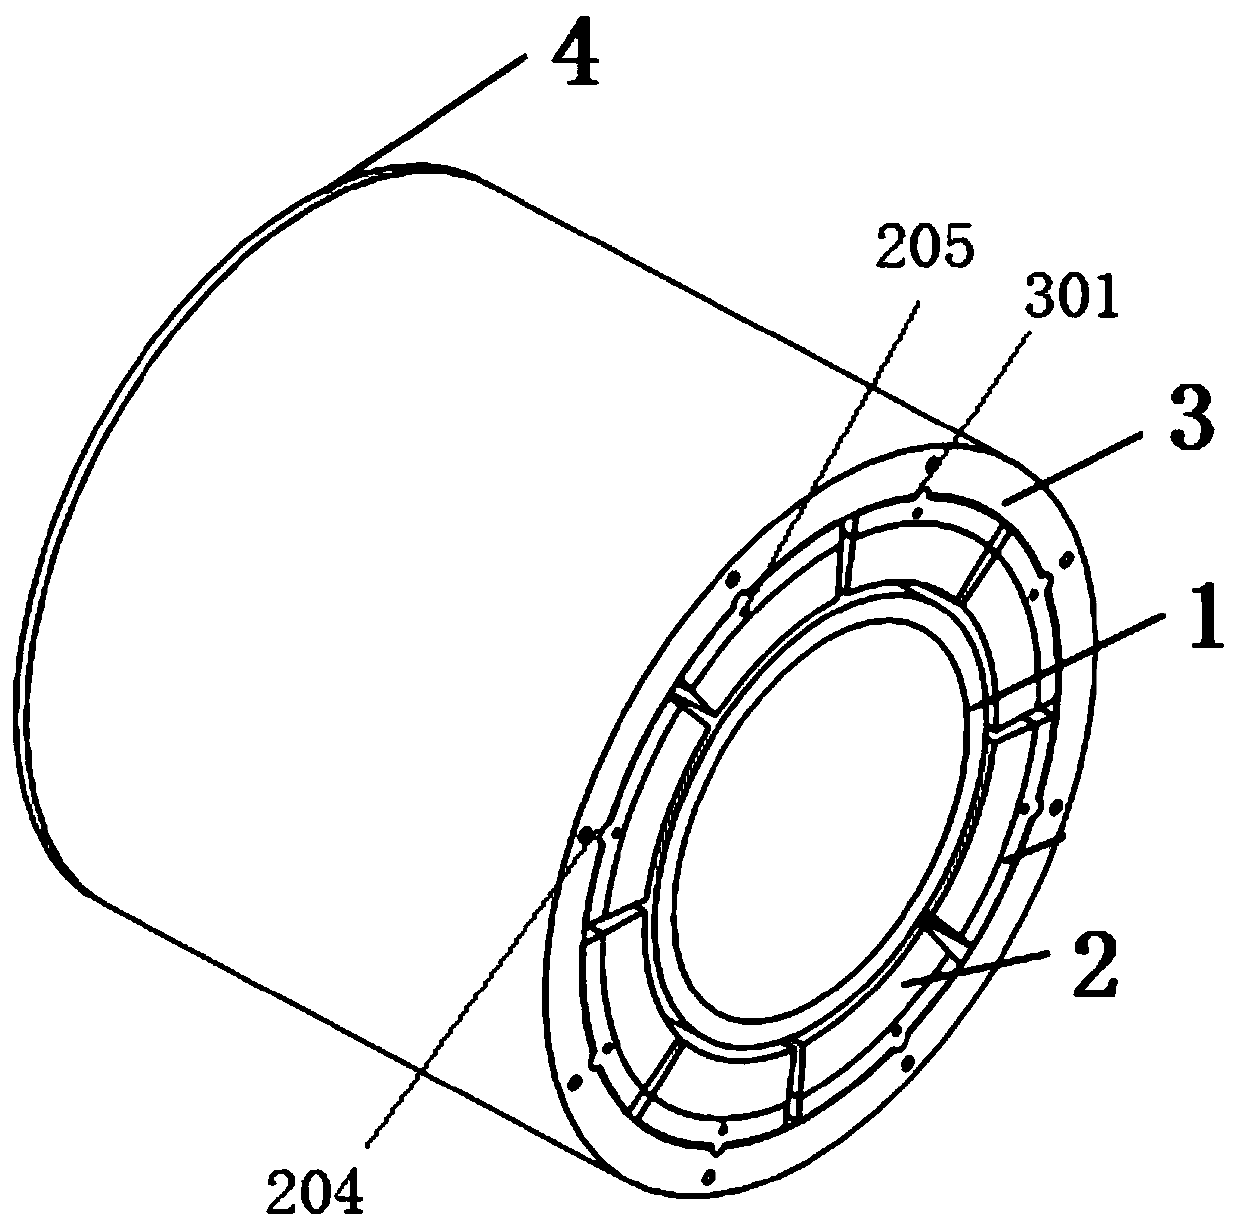 Magnetic fluid composite tilting-pad radial bearing based on Halbach array